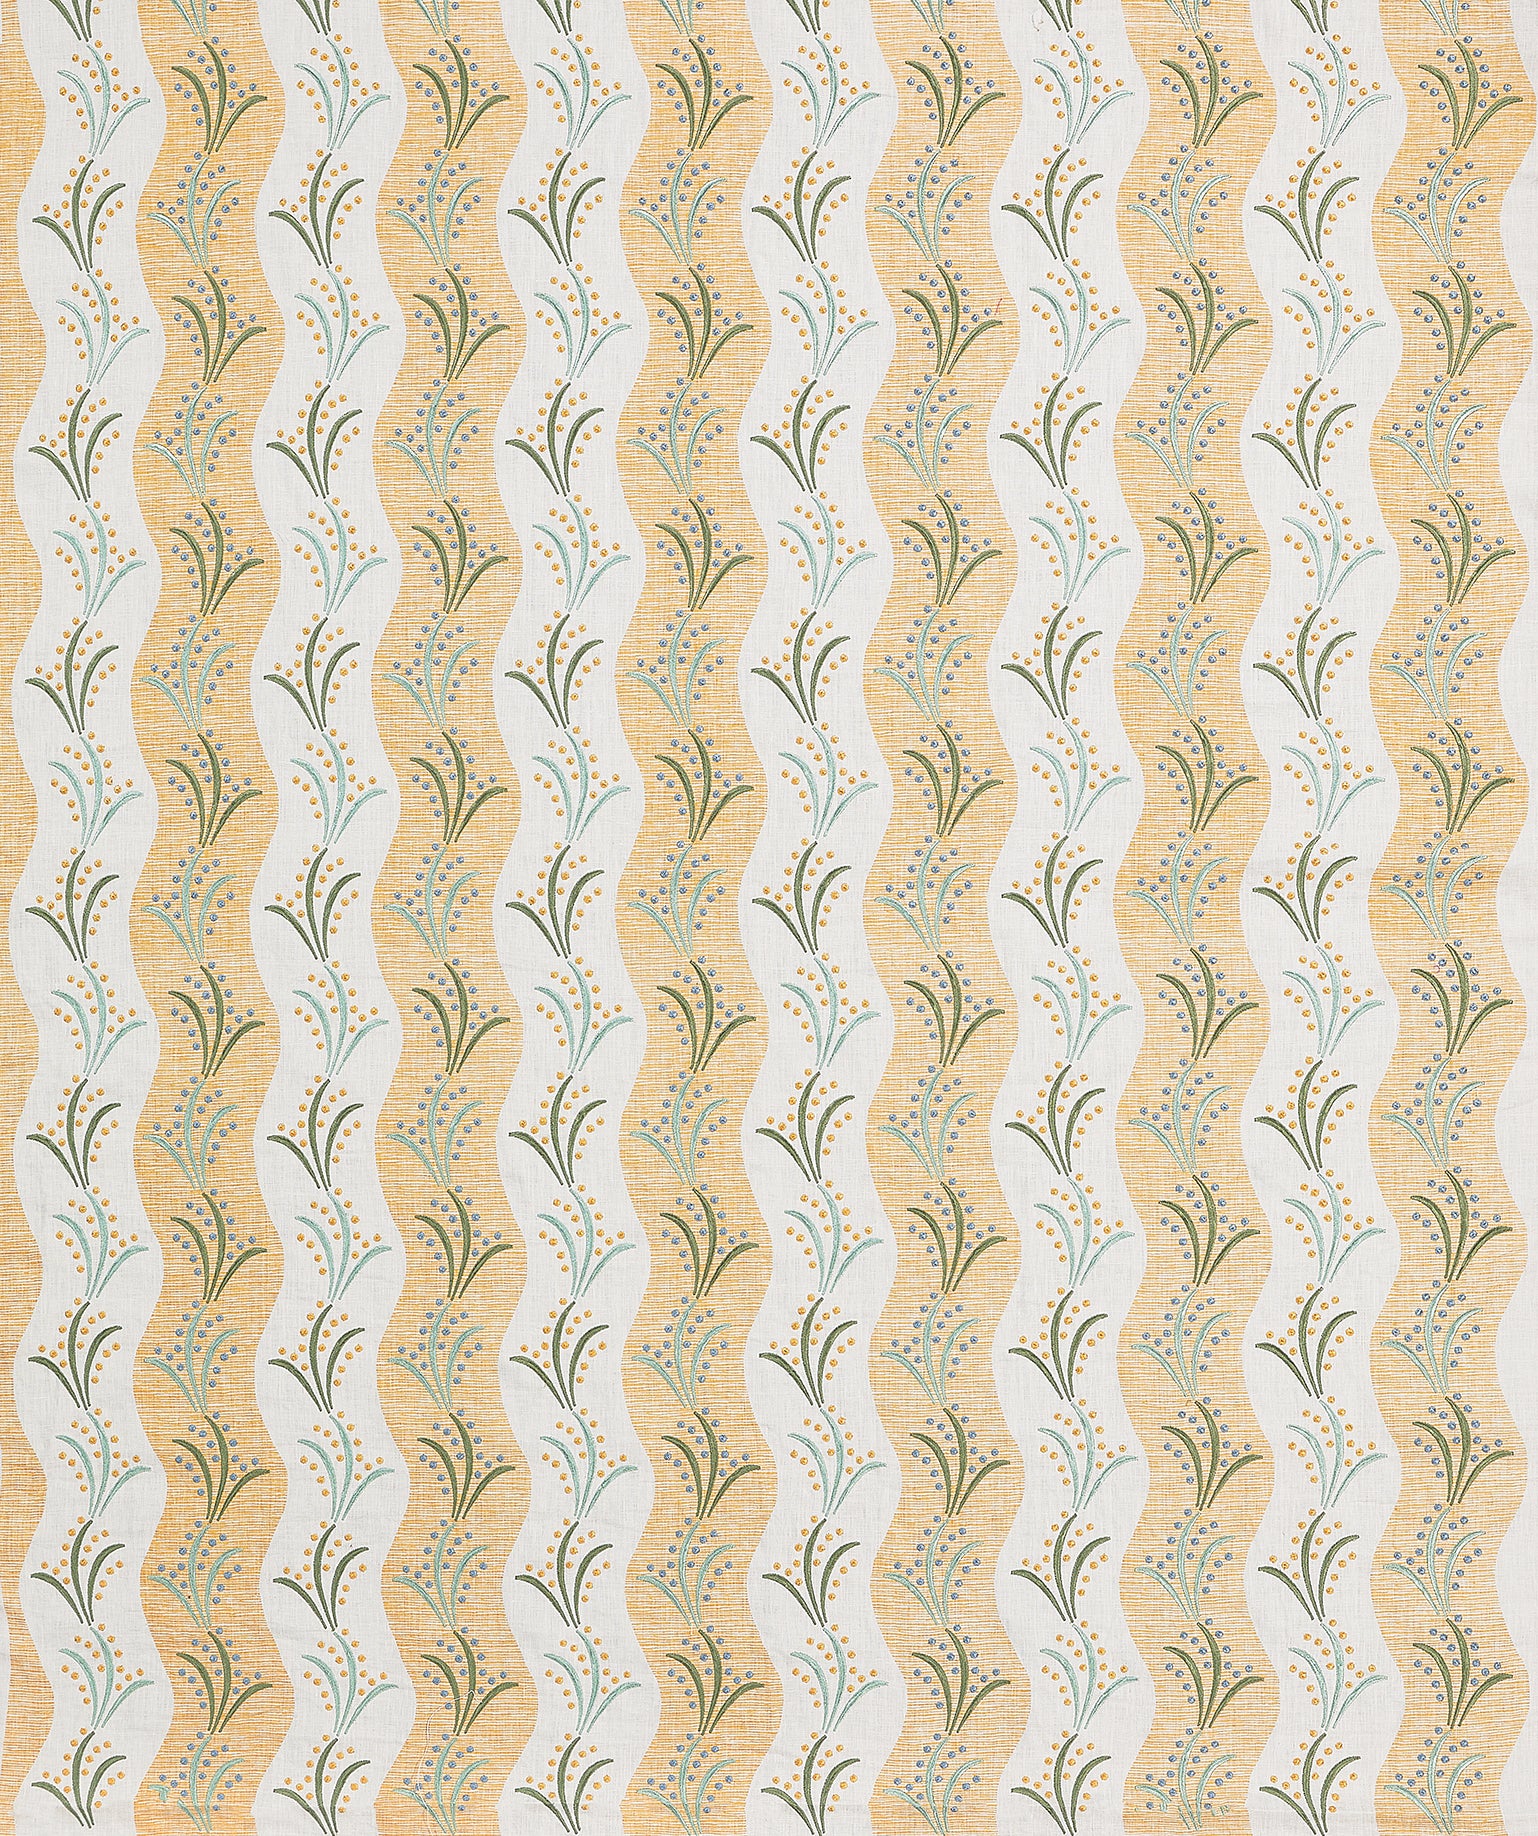 Nina Campbell Fabric - Dallimore Sidney Stripe Yellow/Eucalyptus/Hyacinth NCF4532-03